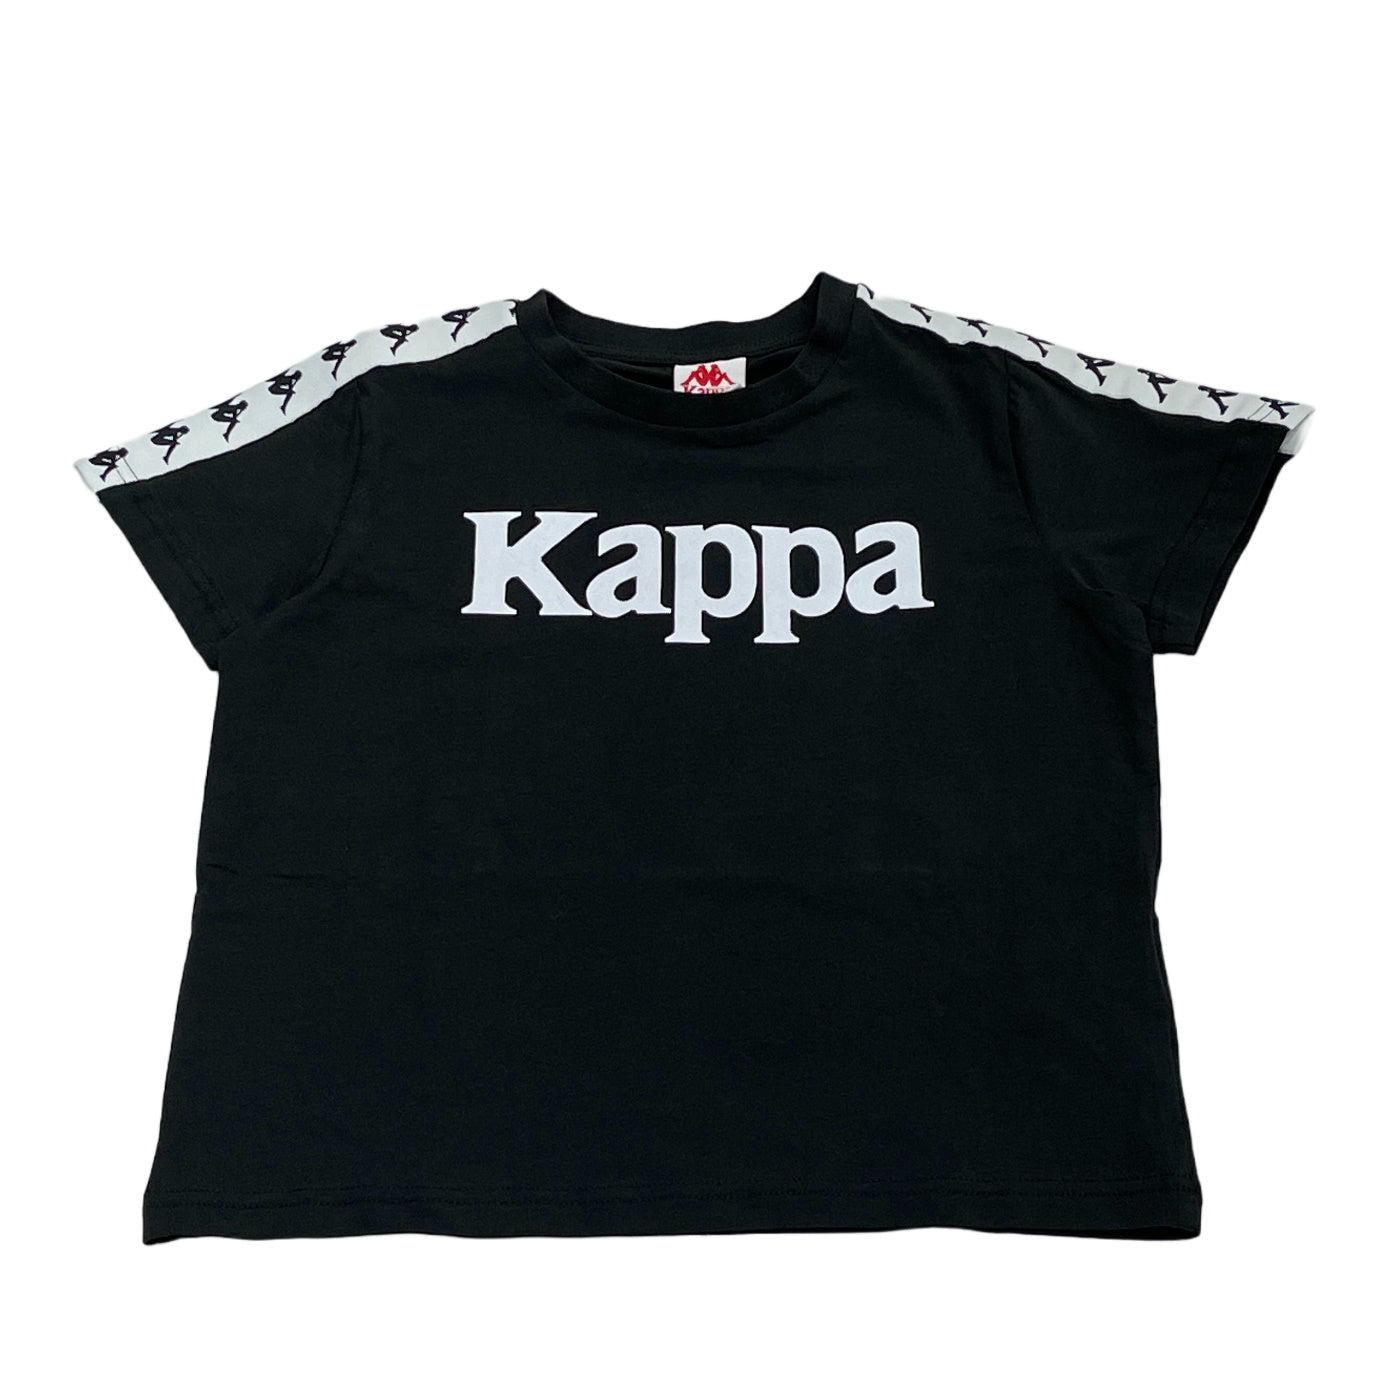 Kappa t-shirt baby